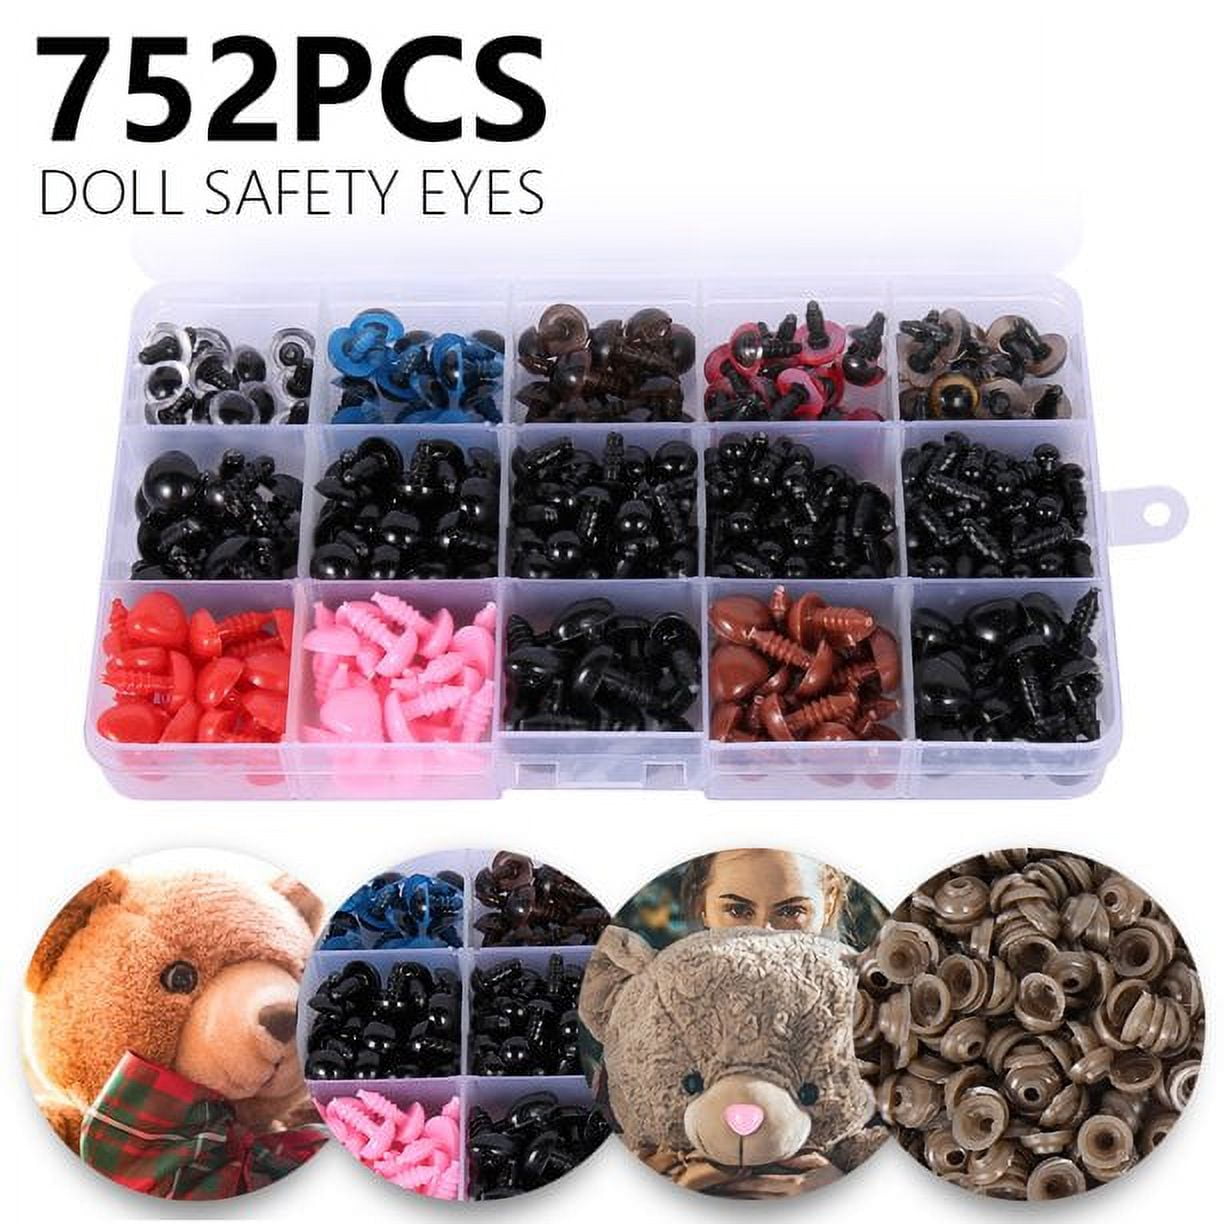 TLKKUE 566pcs Plastic Eyeballs Safety Eyes and Noses Kit With